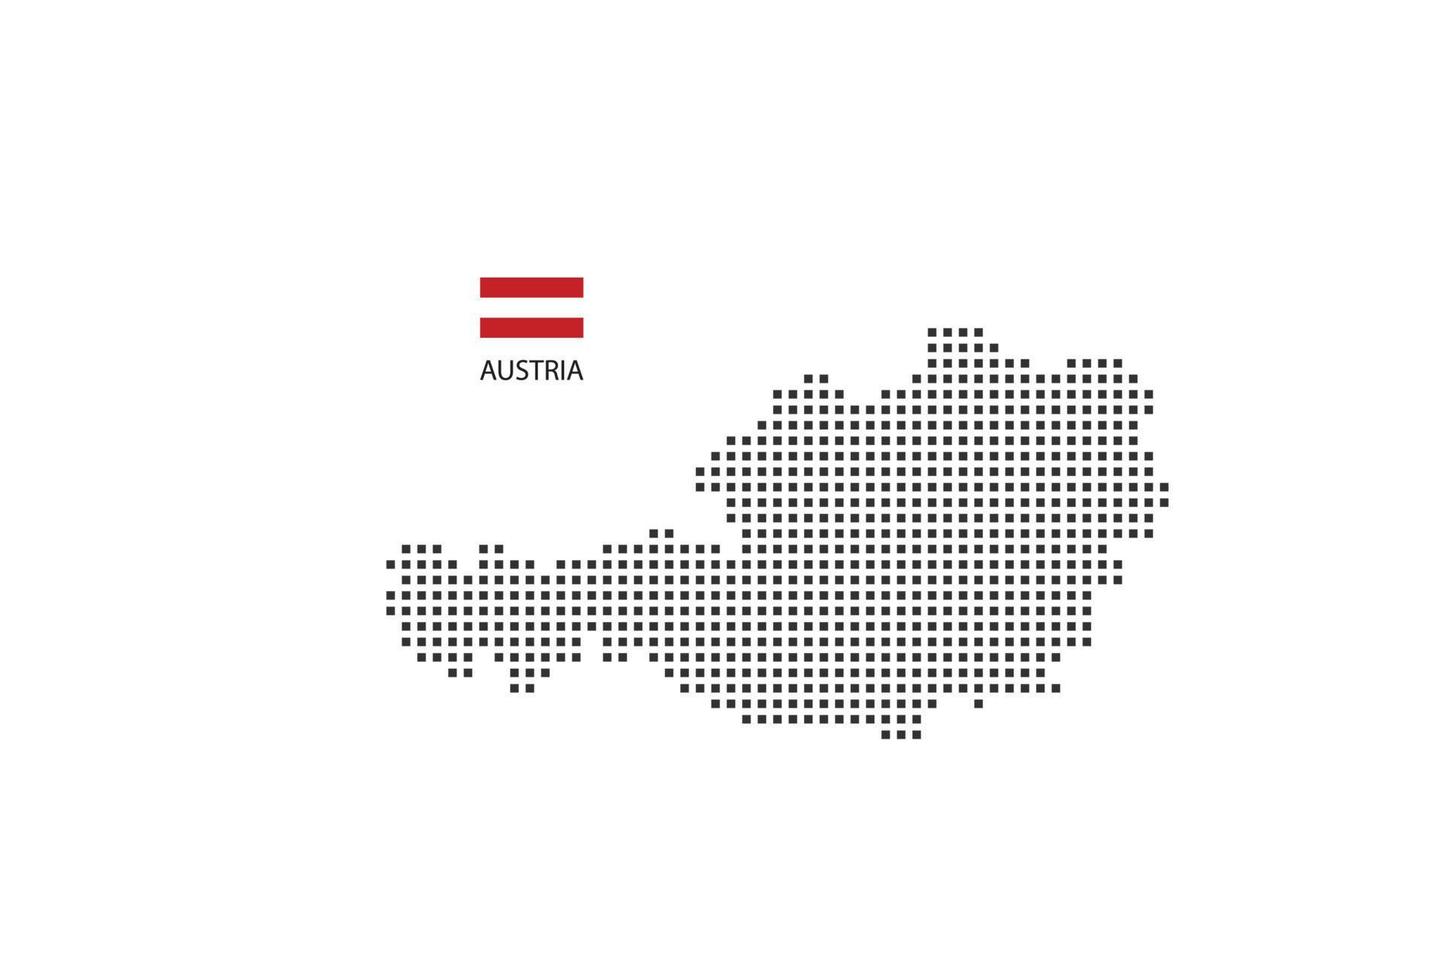 vektor fyrkant pixel prickad Karta av österrike isolerat på vit bakgrund med österrike flagga.